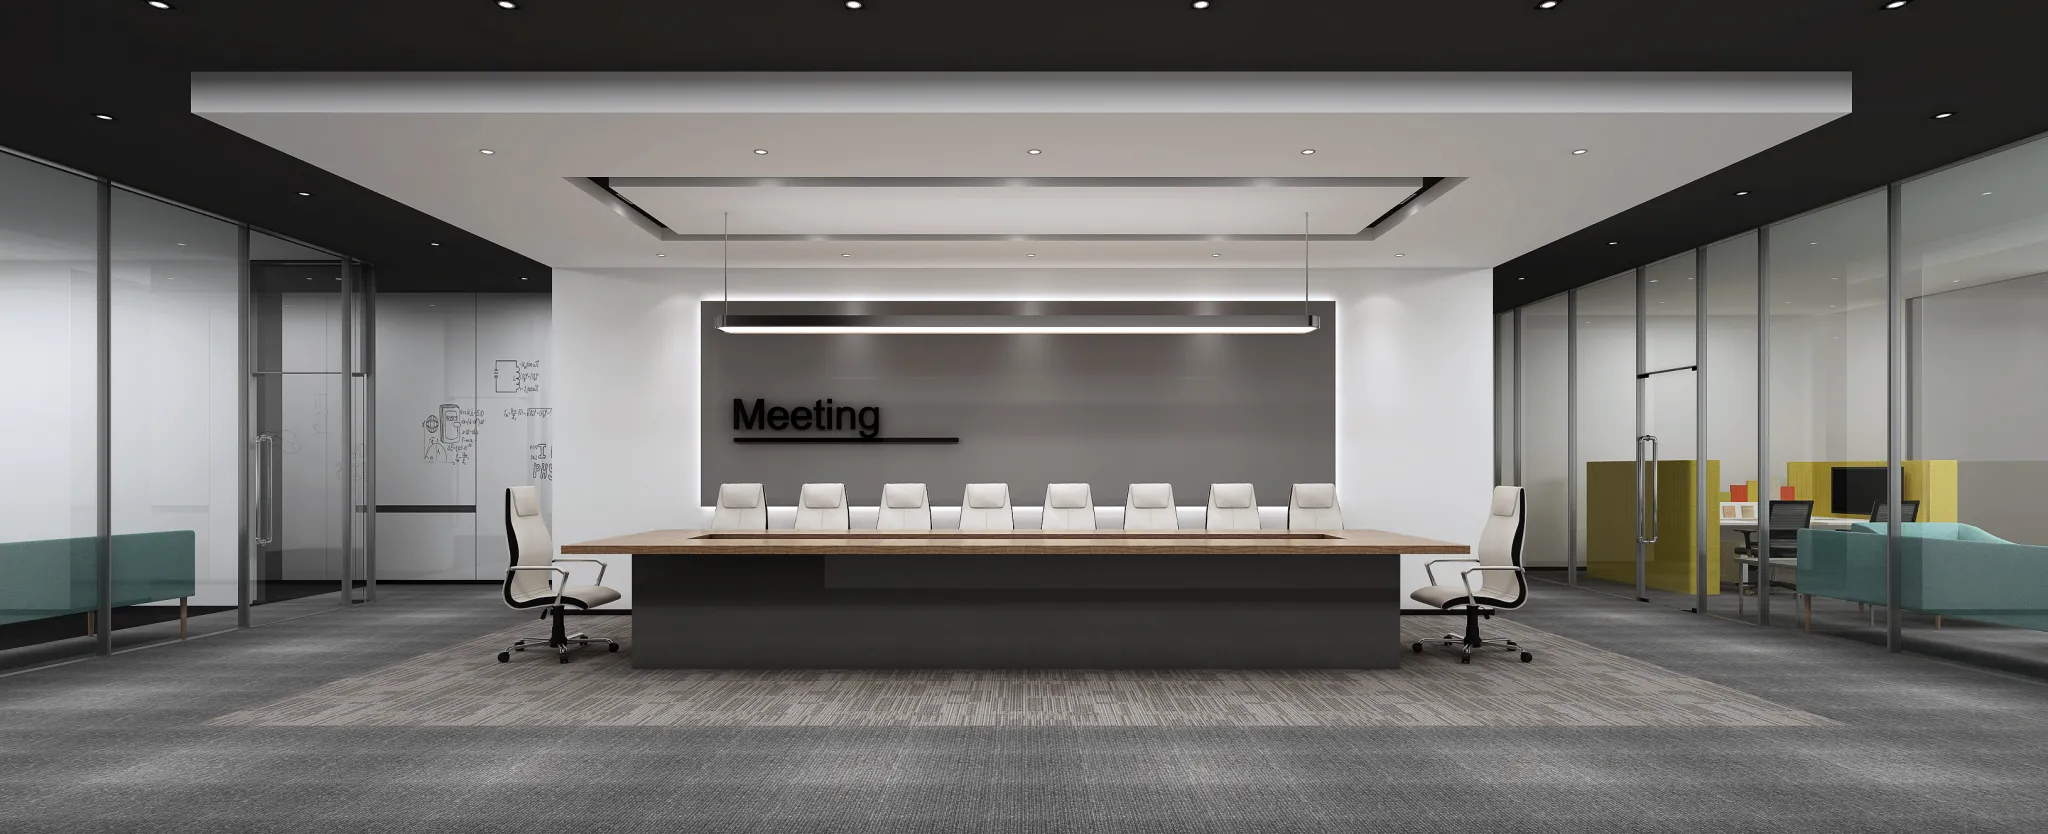 DESMOD INTERIOR 2021 (VRAY) – 25. MEETING ROOM – 017